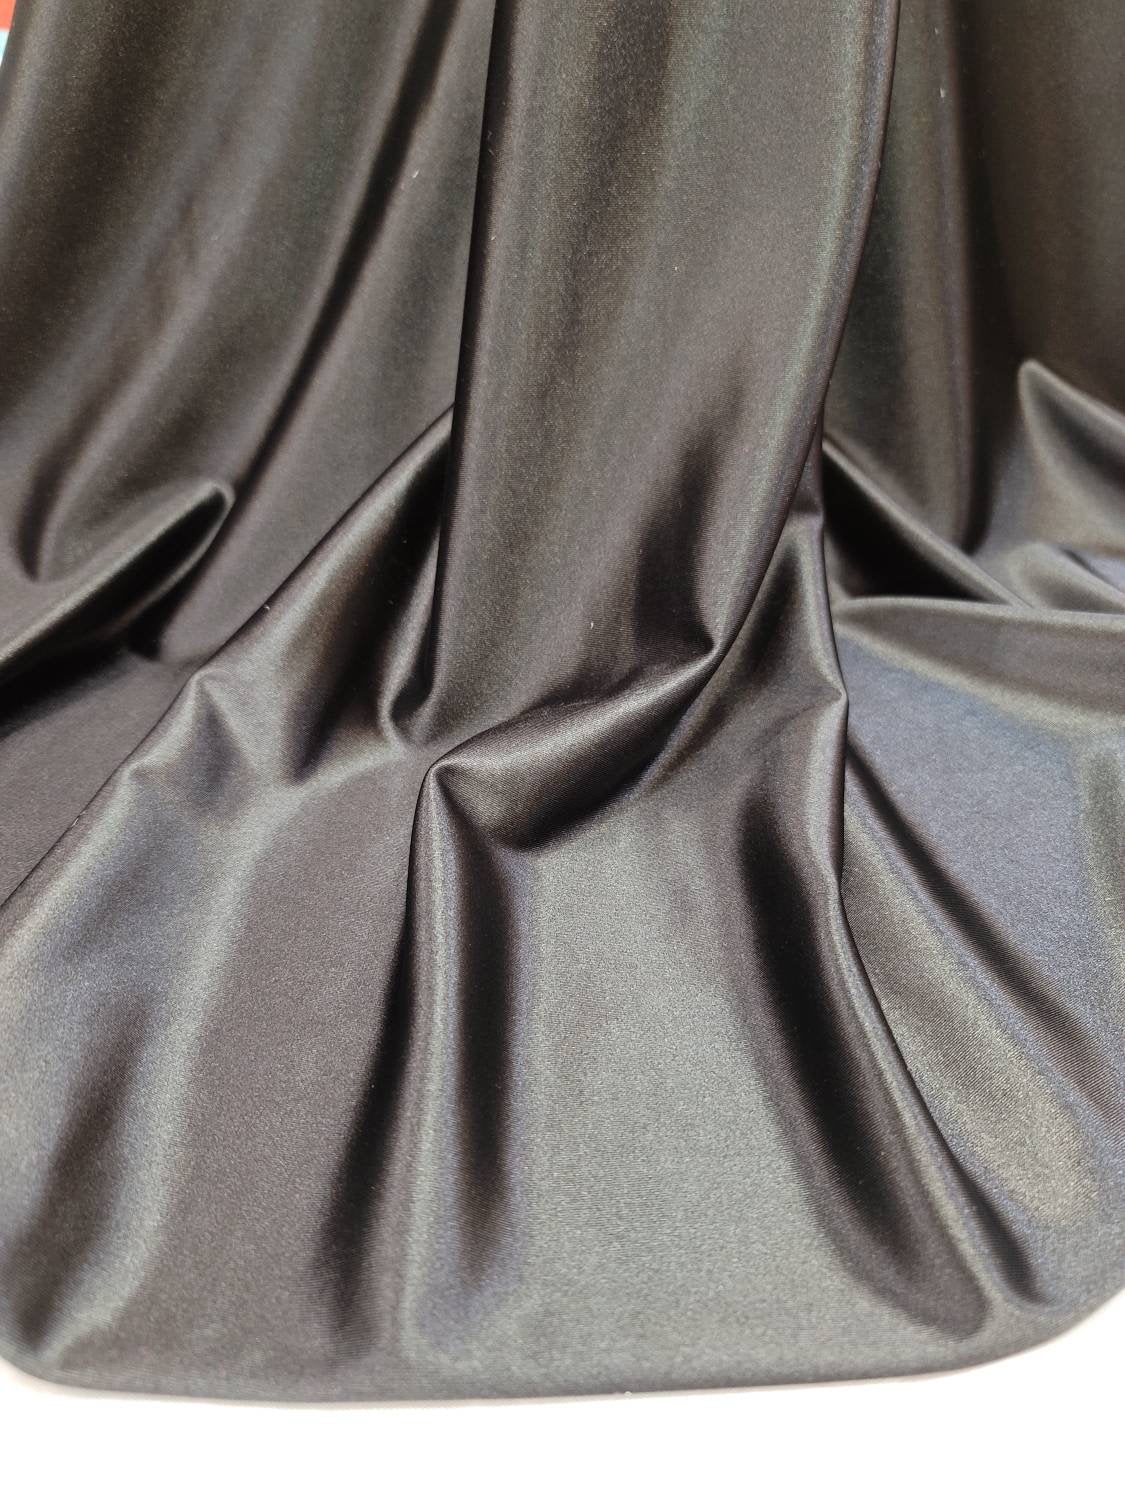 2MM NEOPRENE FABRIC Material Scuba Nylon Suit Material Soft Dress 150CM  Clothing | eBay